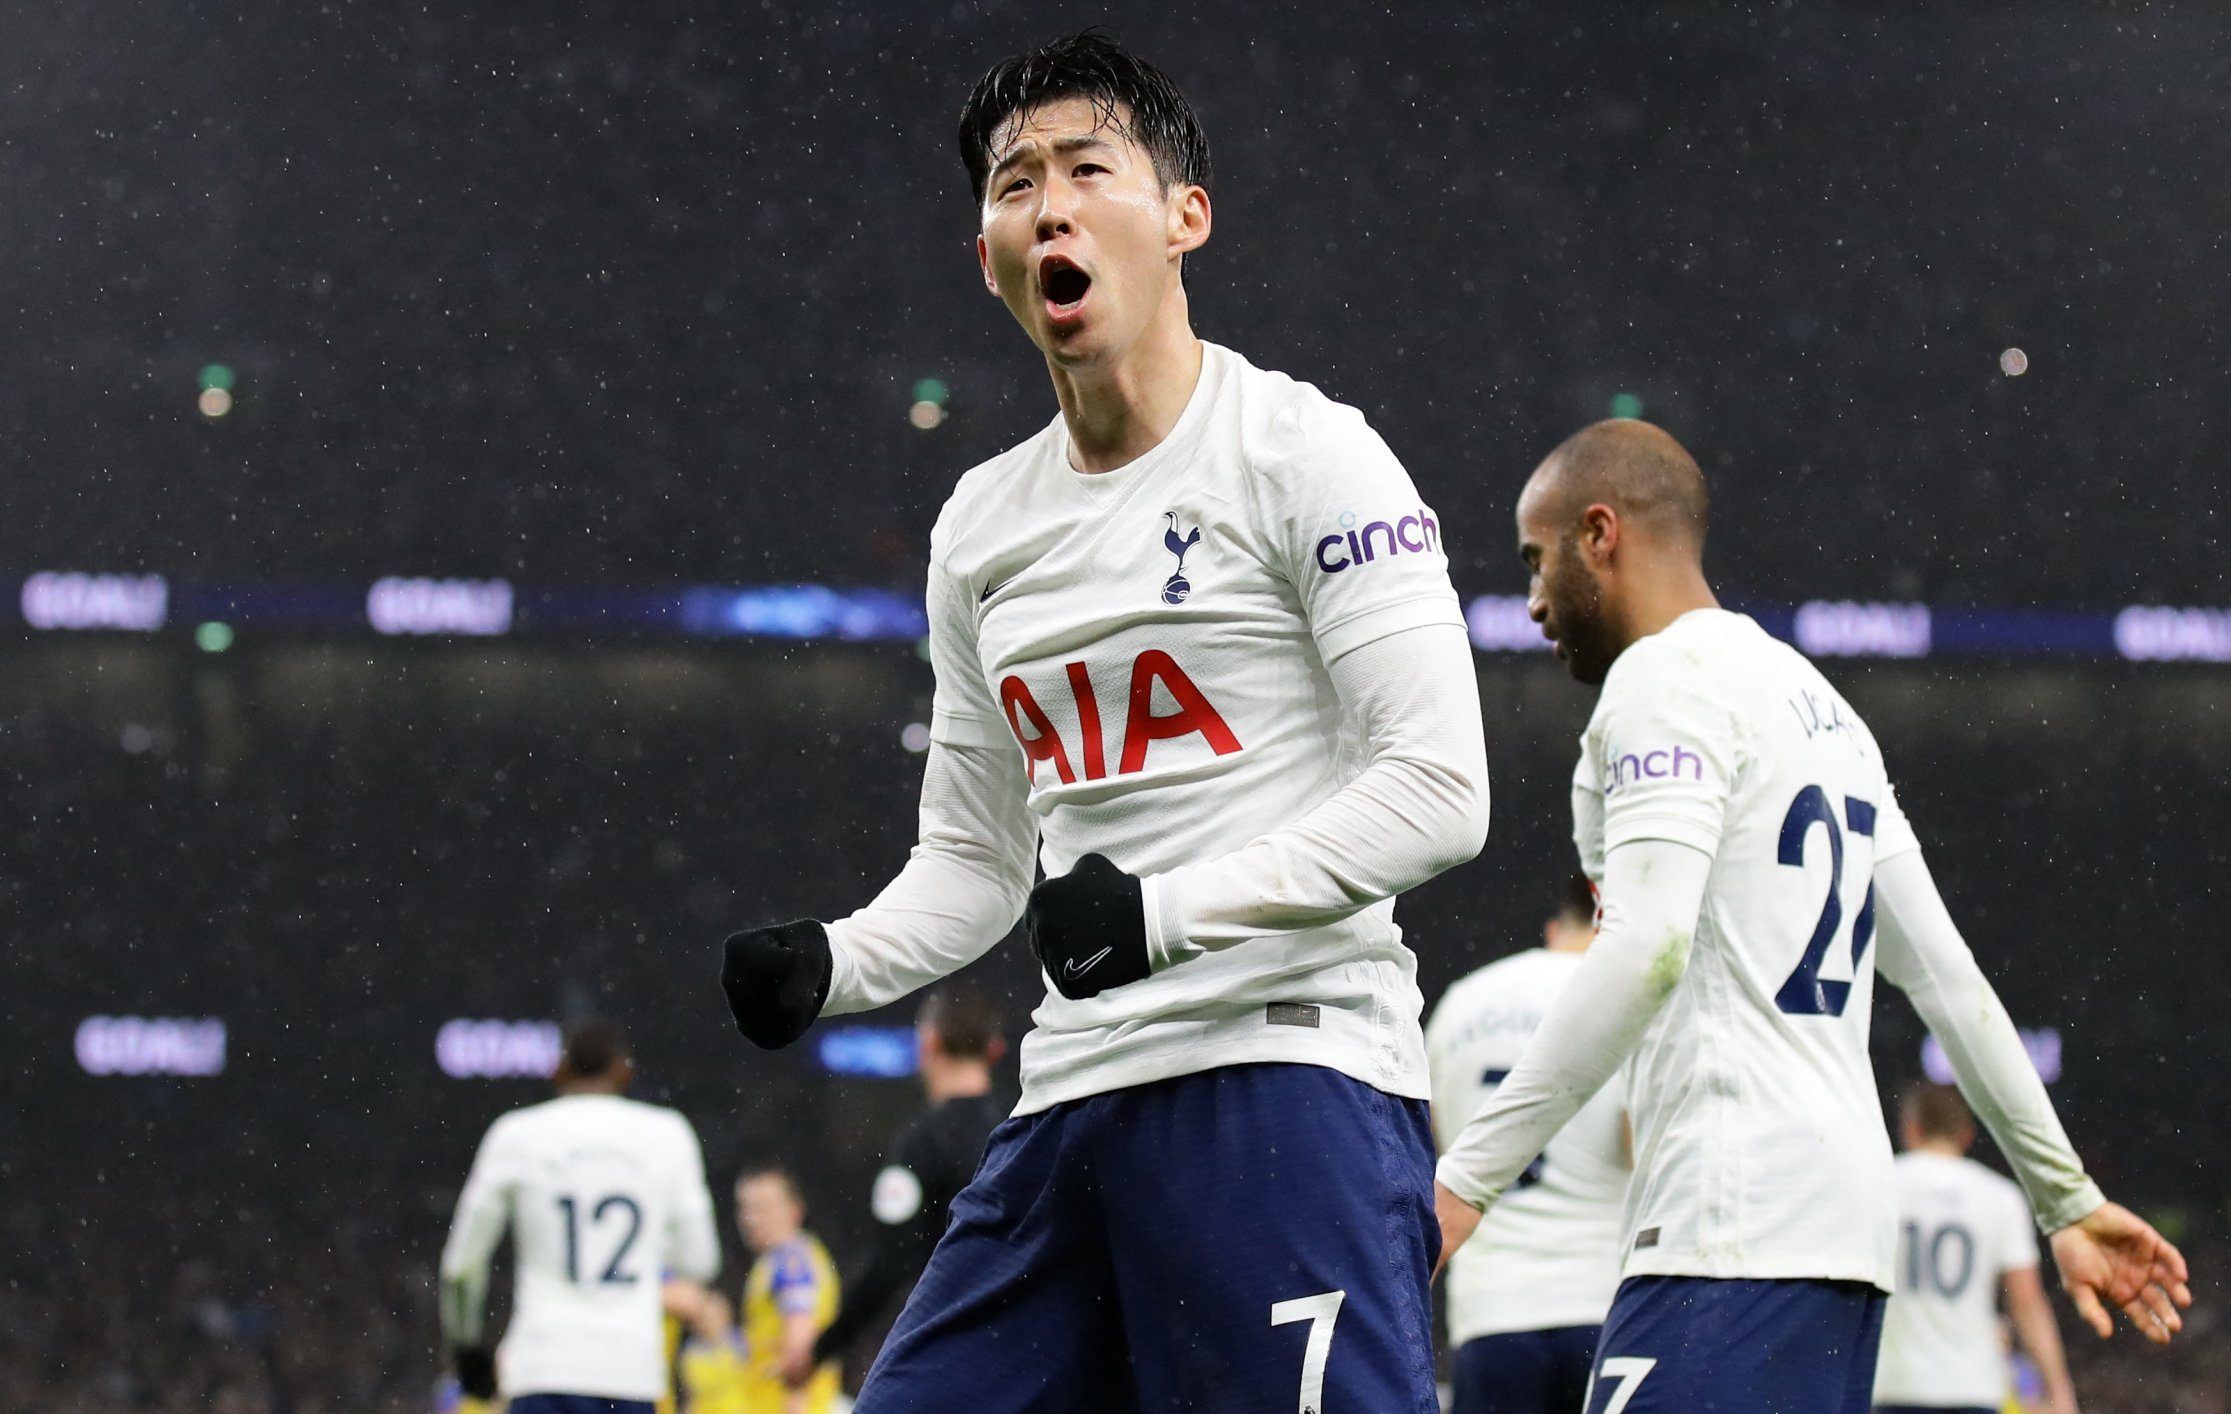 Spurs winger Heung-min Son celebrates scoring against Southampton in the Premier League